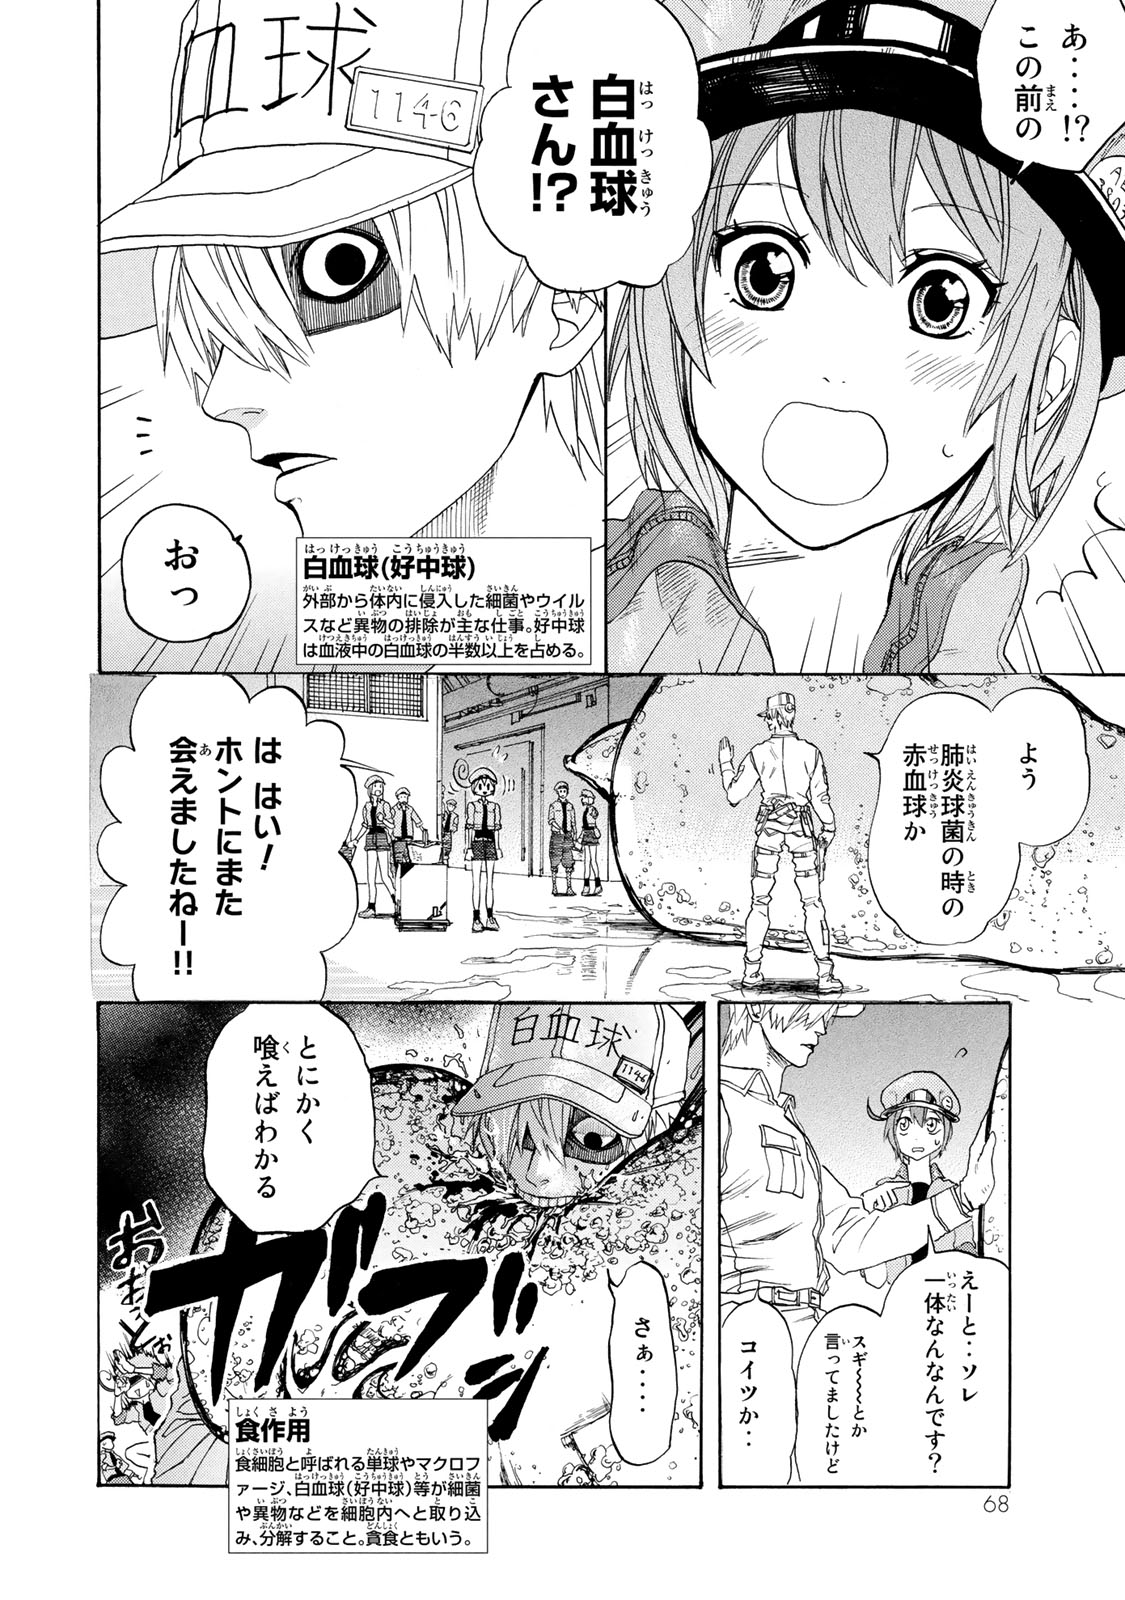 Hataraku Saibou - Chapter 2 - Page 8